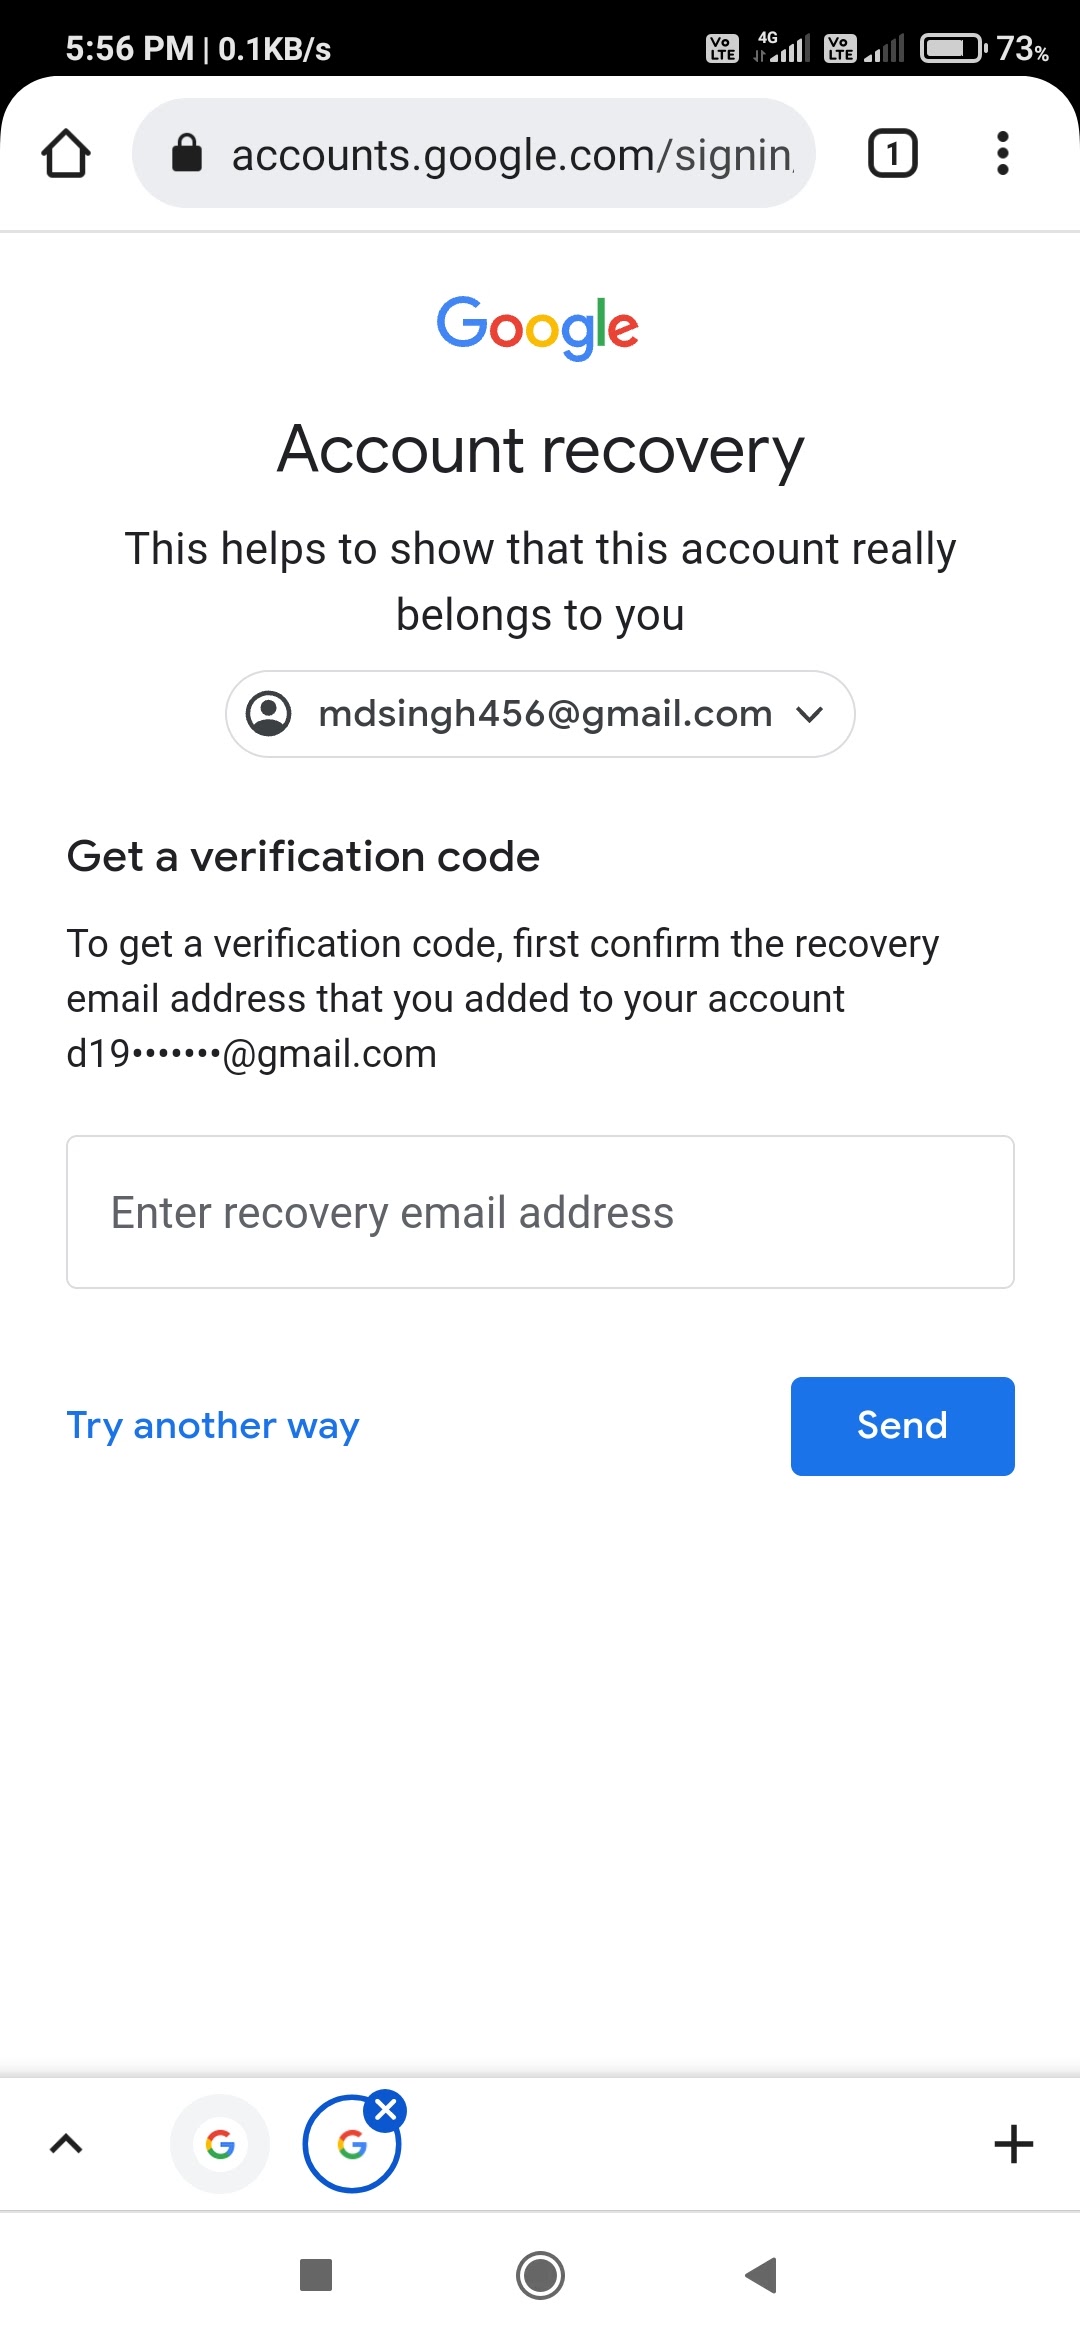 Is my Google Account password also my Gmail password?